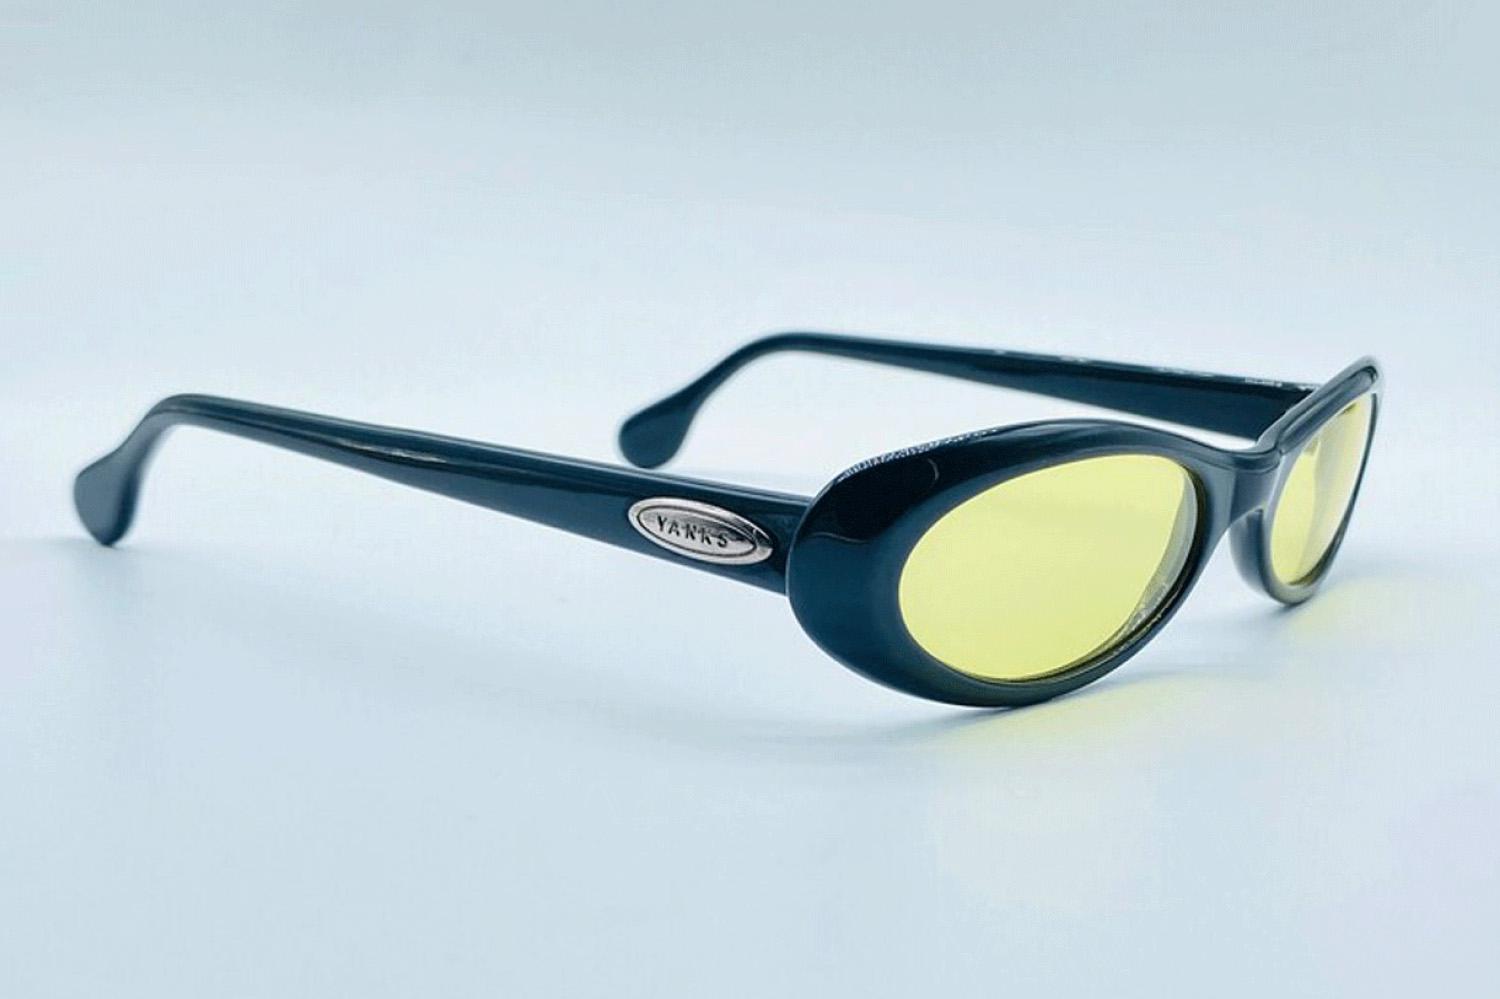 Солнцезащитные очки, Yanks, 9150 руб. (moloko-glasses.ru)